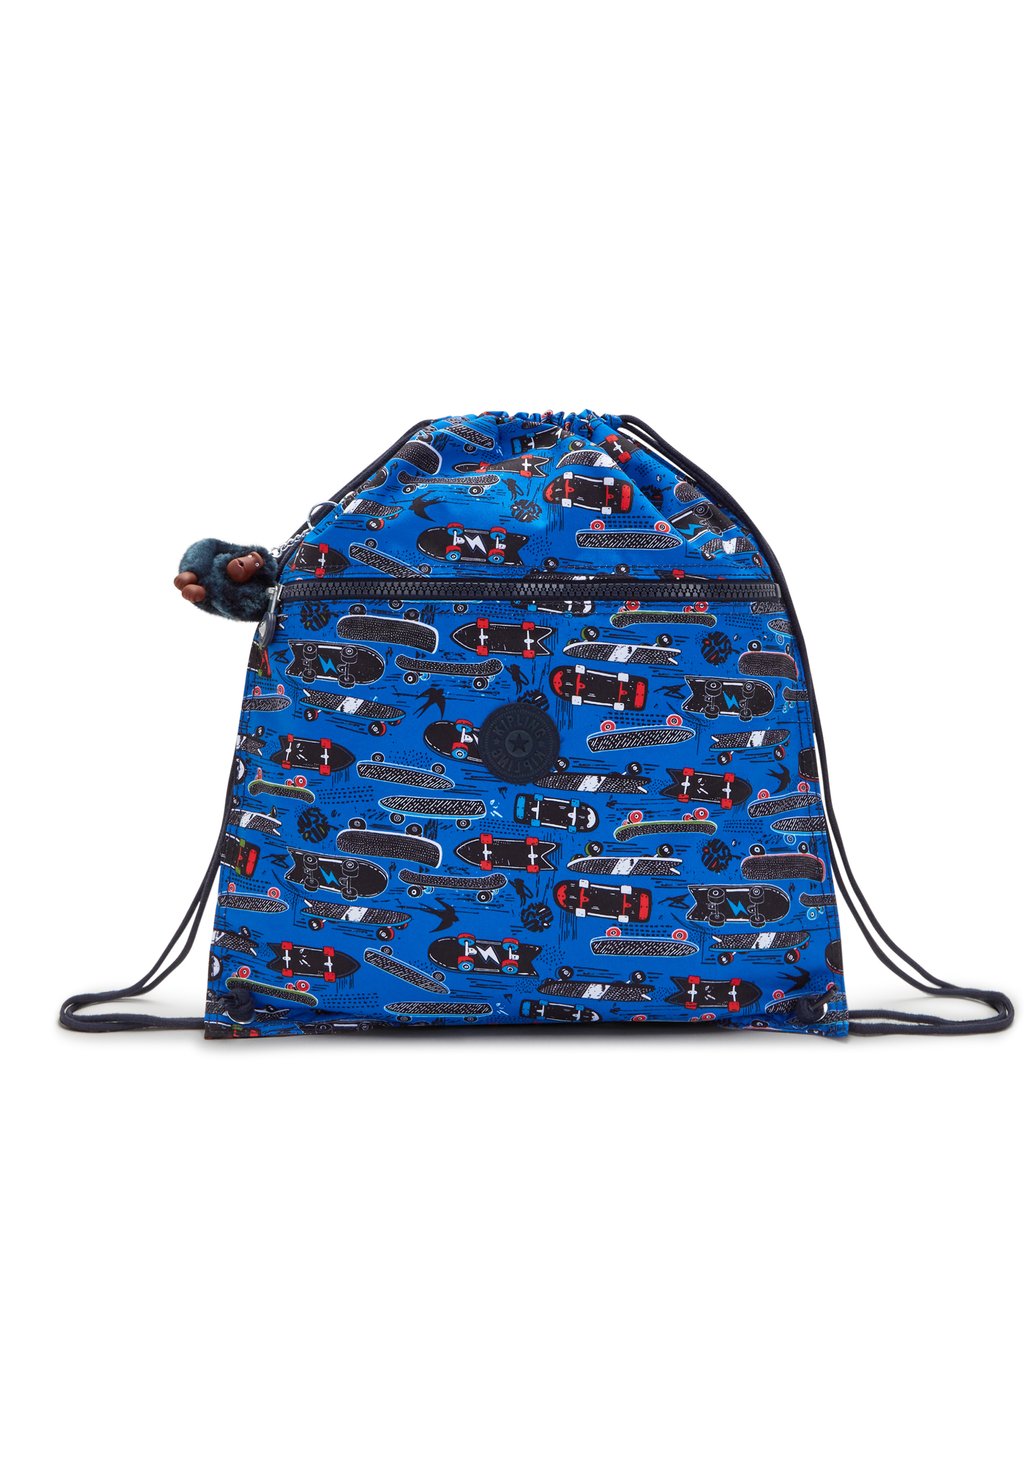 Спортивный рюкзак SUPERTABOO Kipling, синий